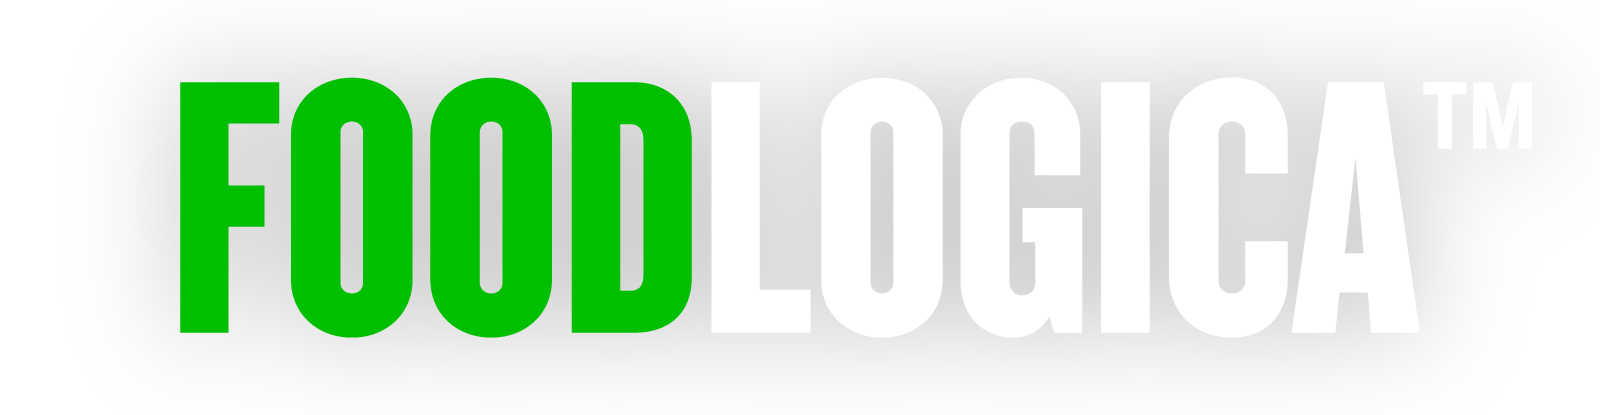 Foodlogica logo